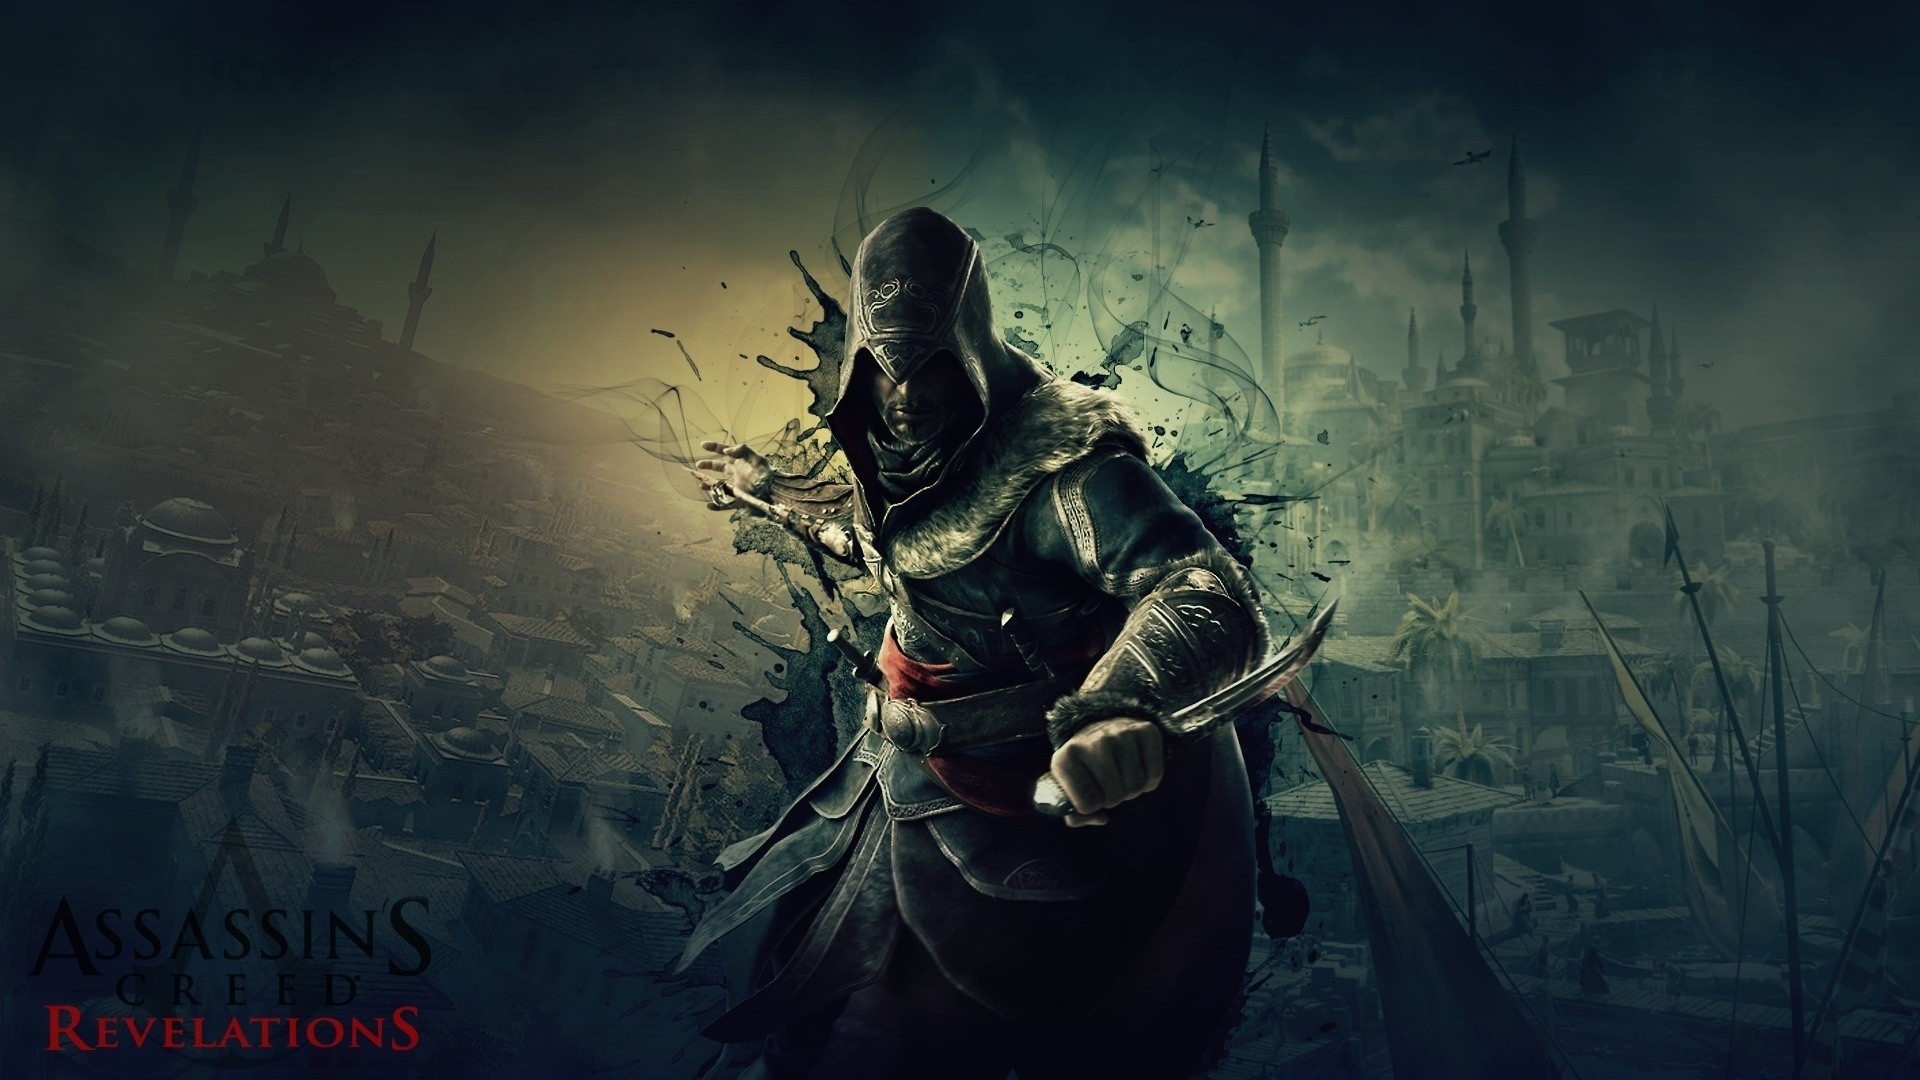 Assassins Creed Revelations , Desmond Miles , Graphics - Assassin's Creed Revelation Hd , HD Wallpaper & Backgrounds